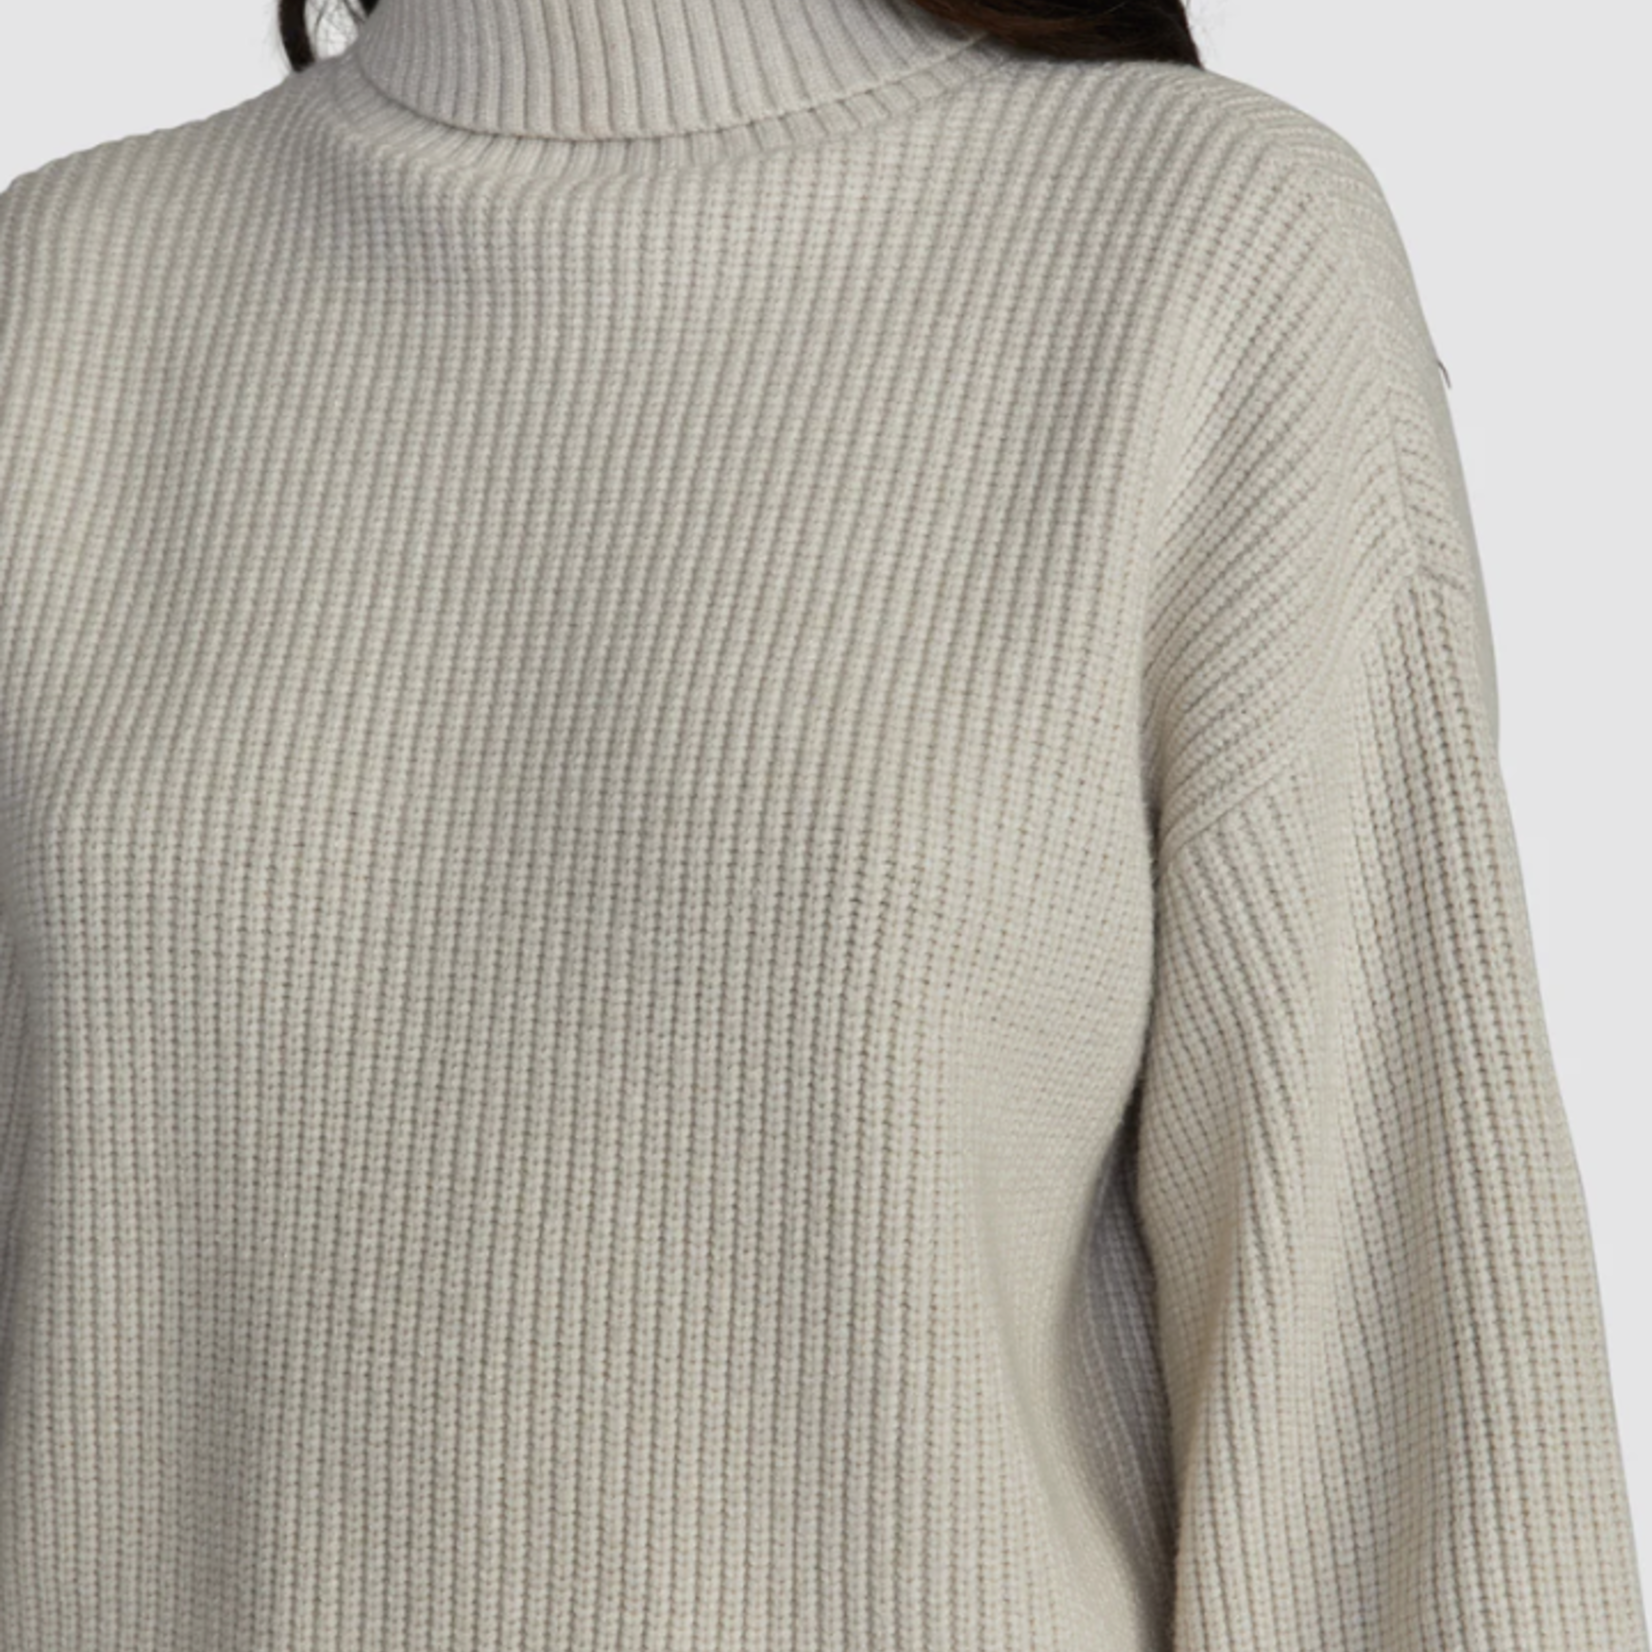 RVCA Vineyard Sweater